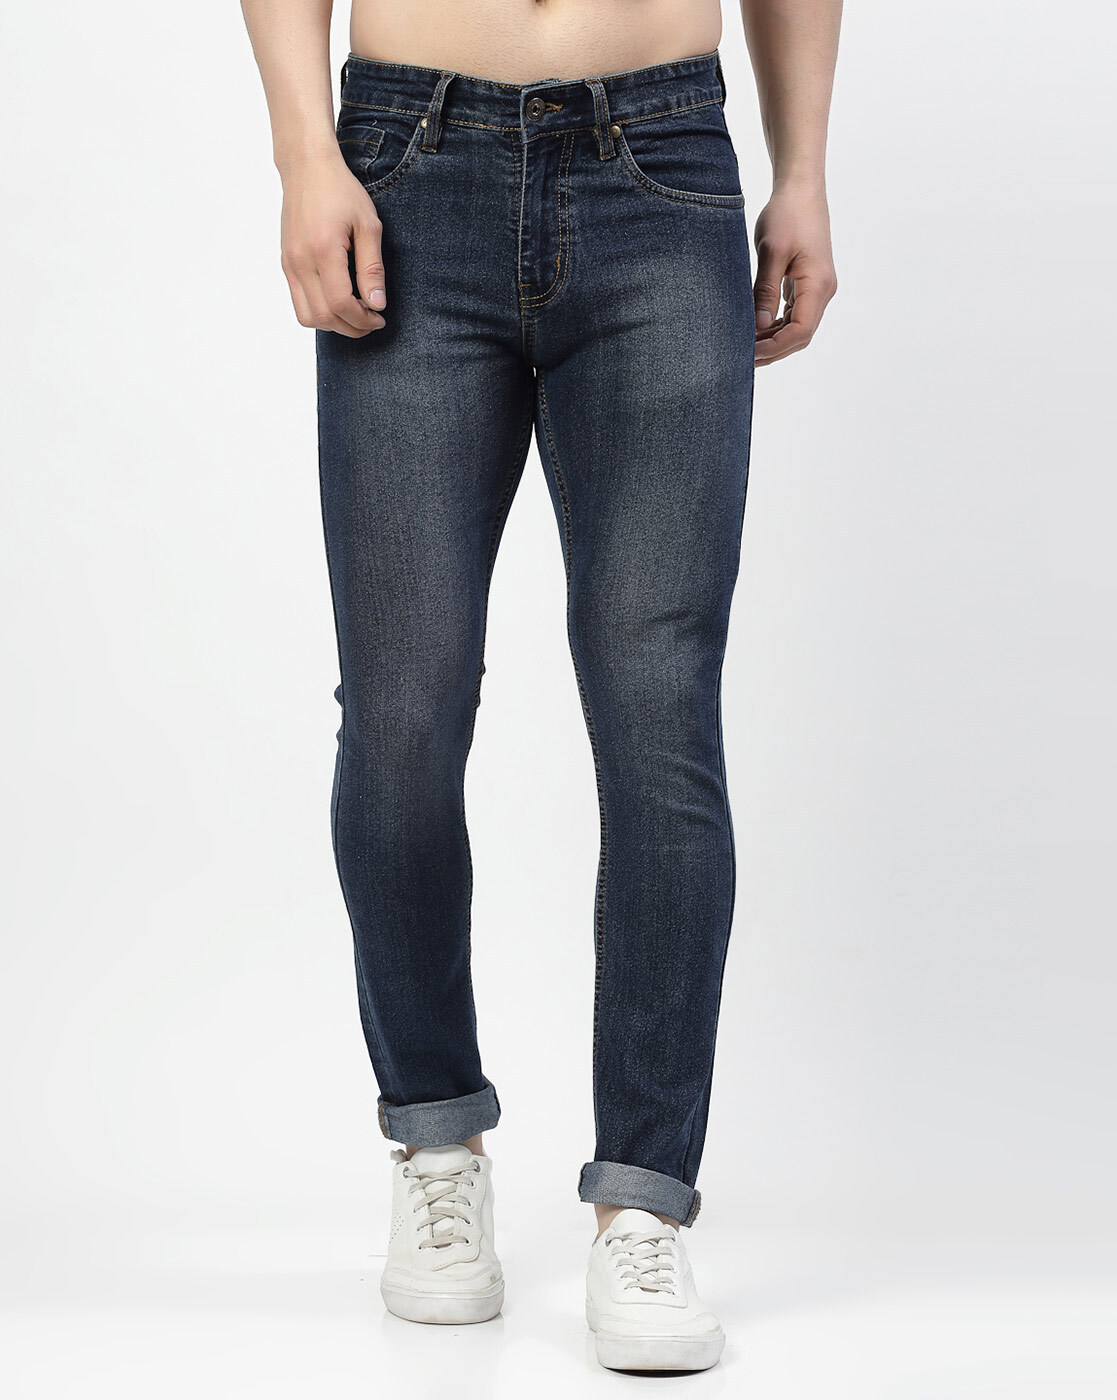 Buy Blue Jeans for Men by COSMIC Online